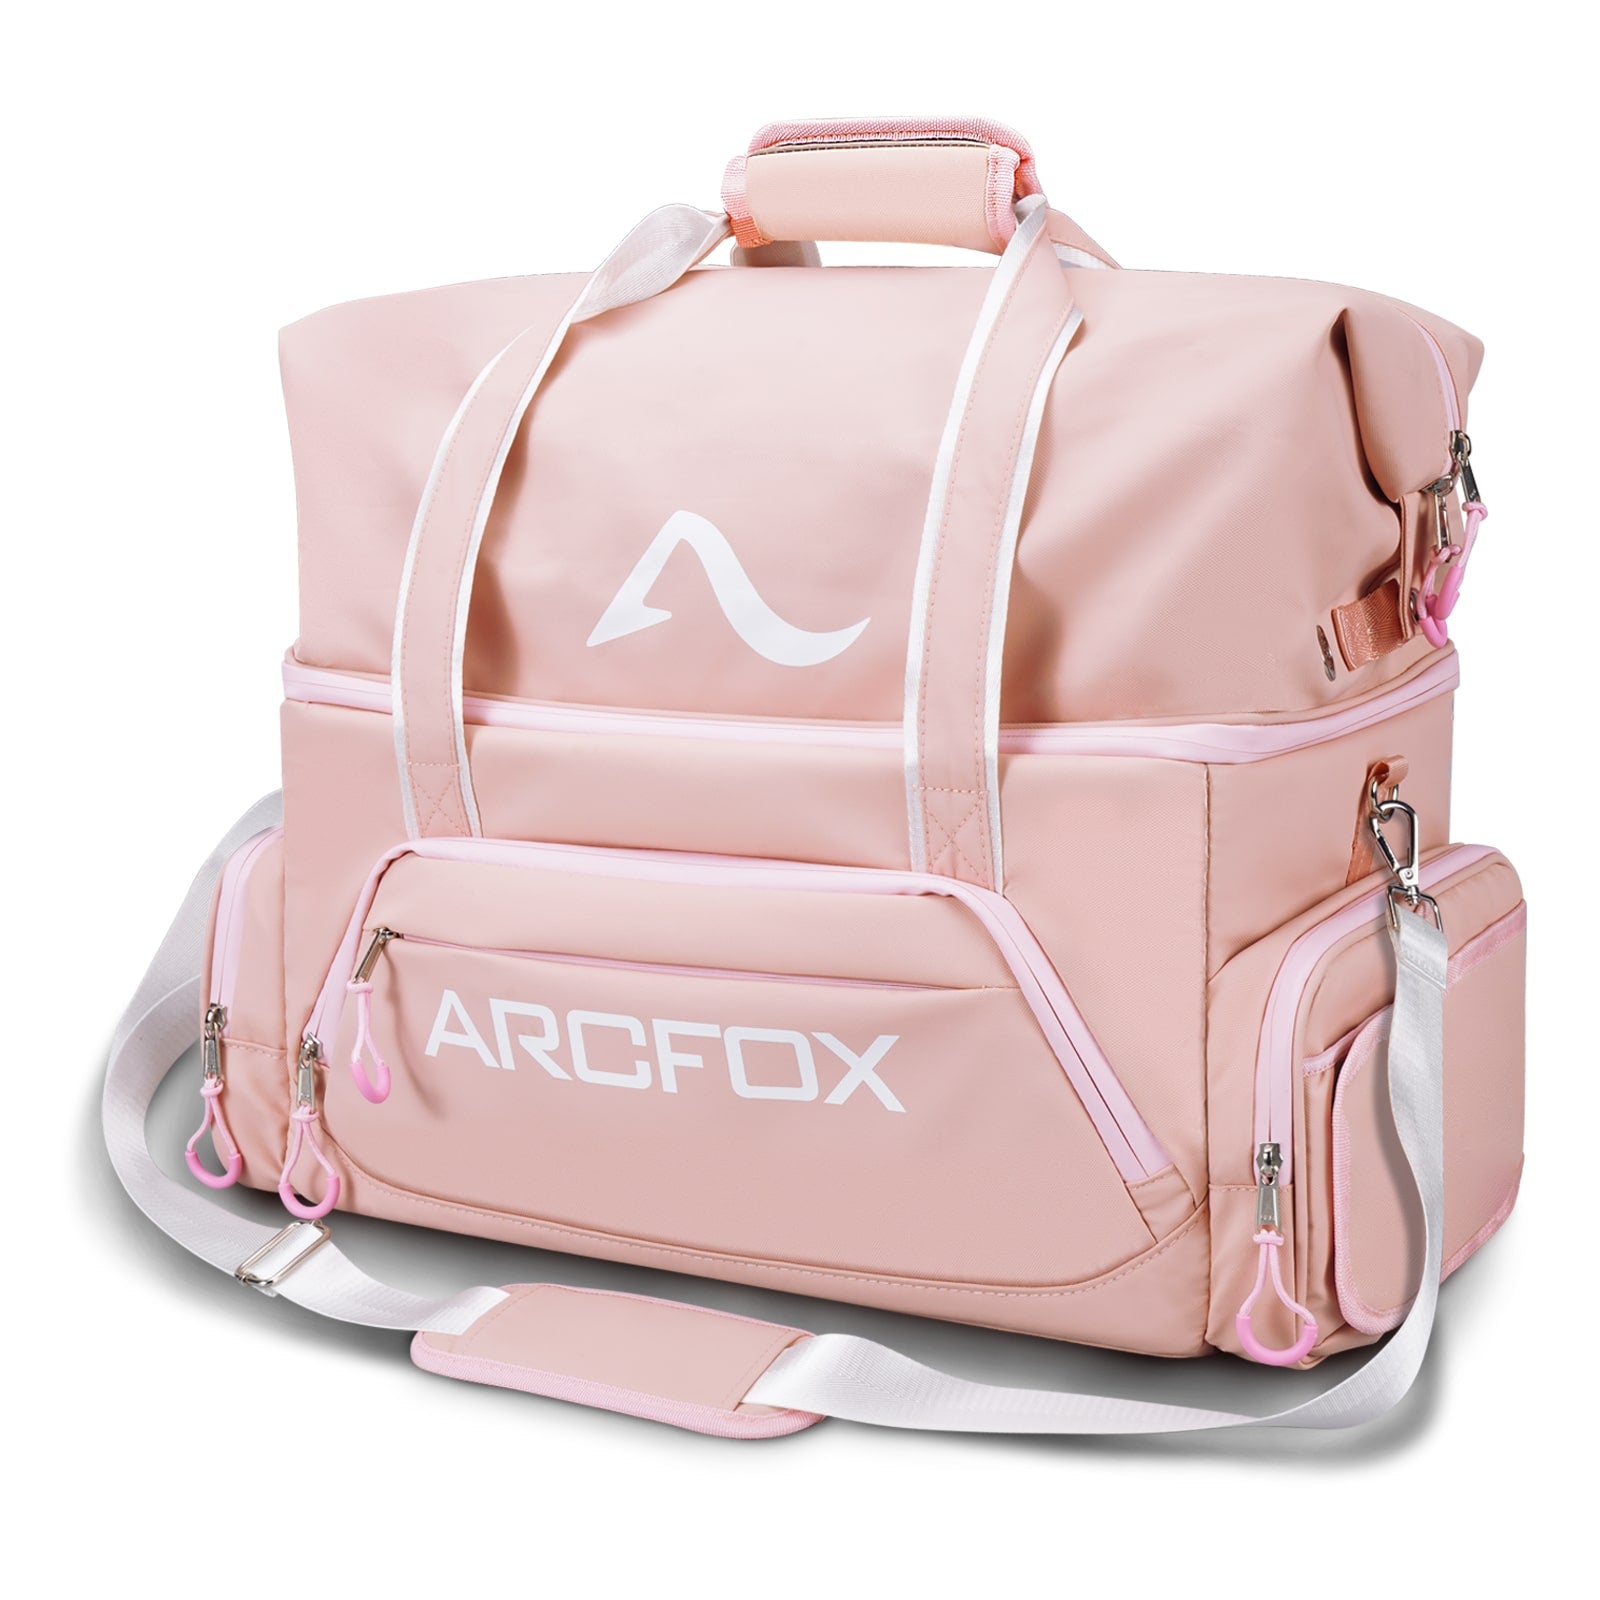 ARCFOX Bowling Bag For 2 Balls OXford Cloth Large Capacity